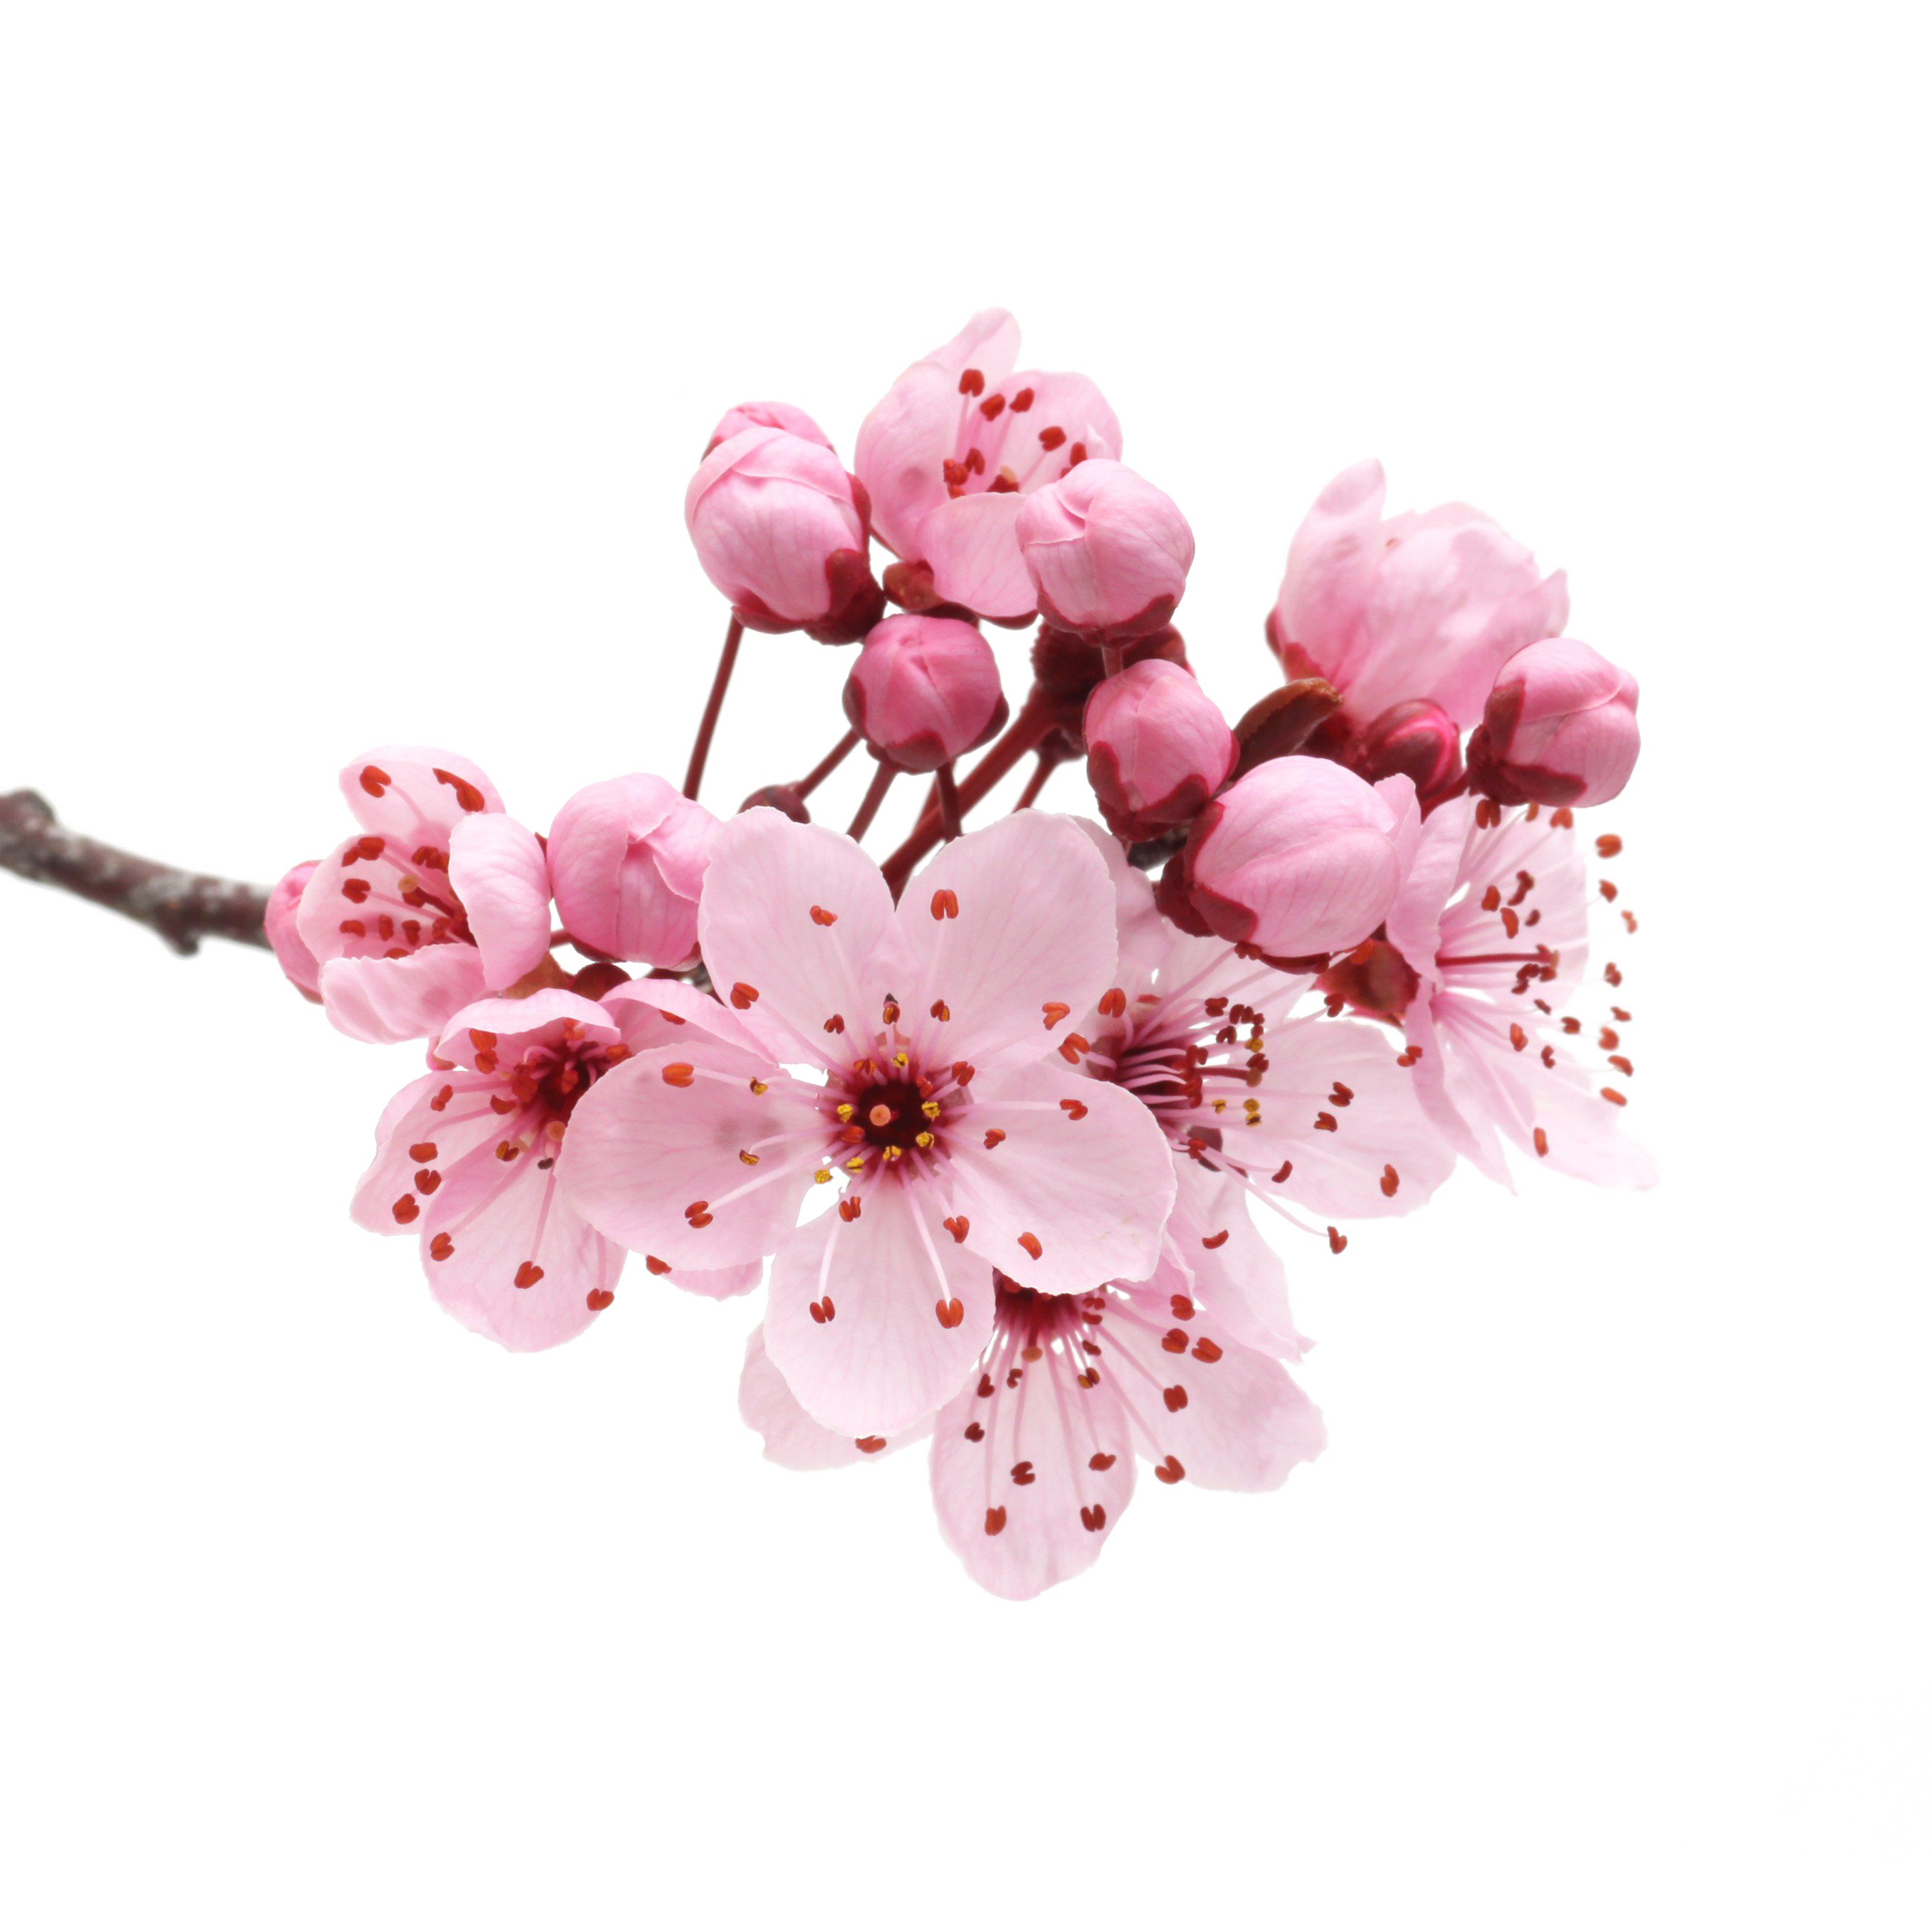 Bunga sakura tanpa latar belakang